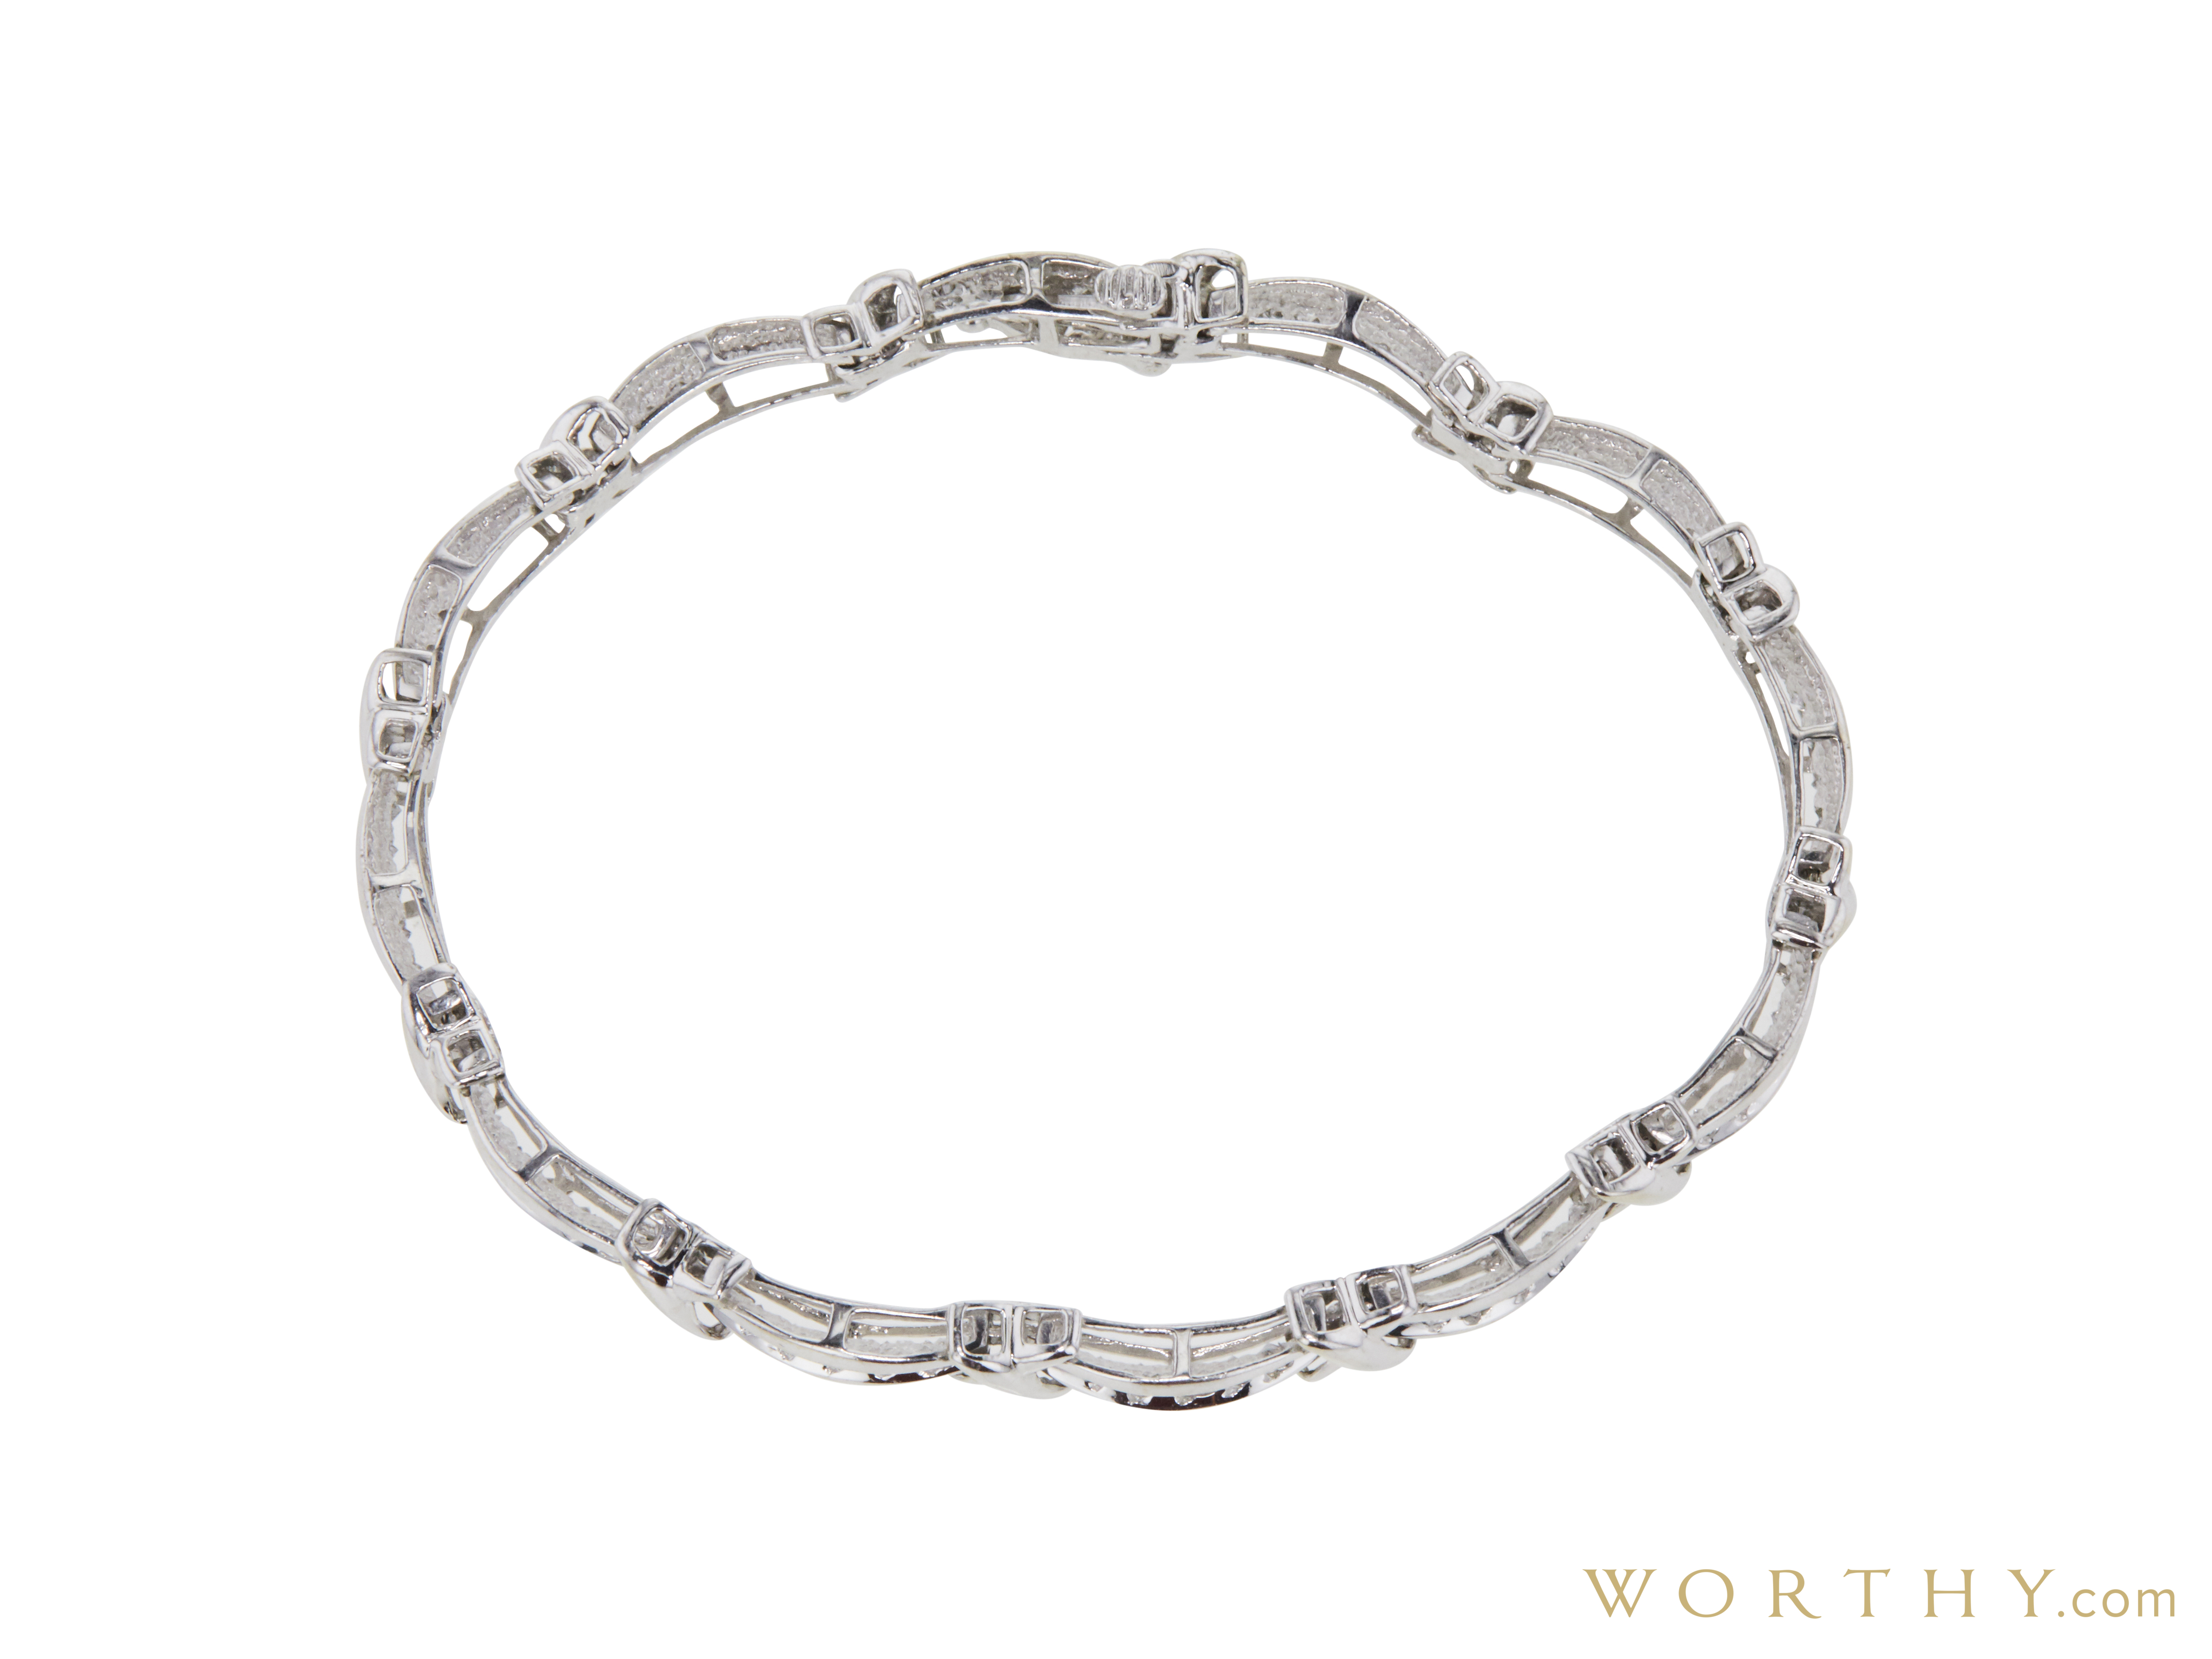 Four Tennis Bracelets | Sold For $3,060 | Worthy.com